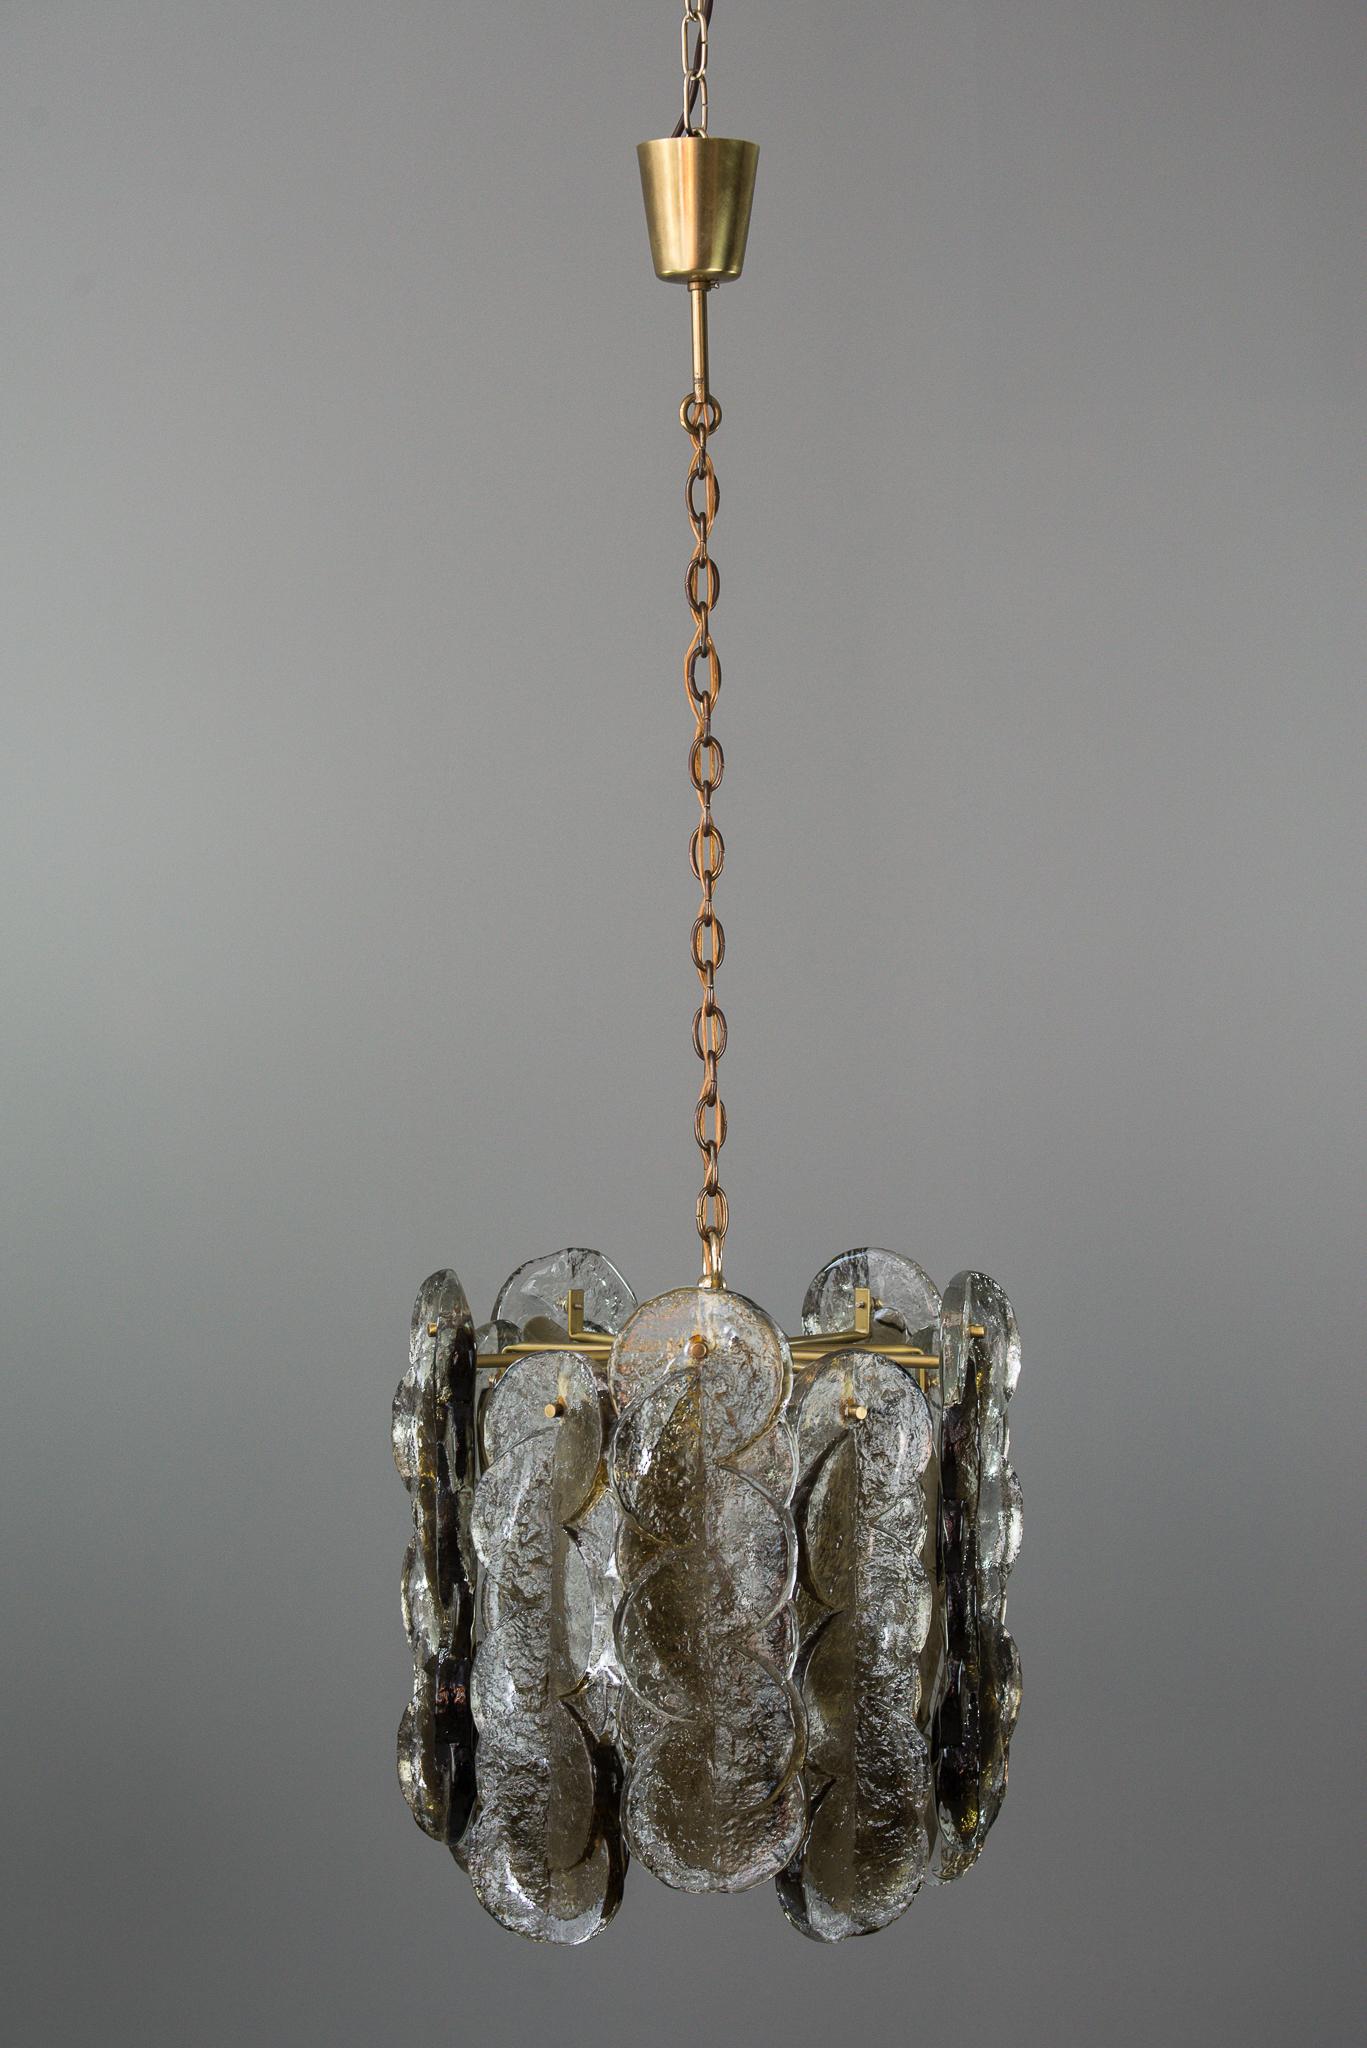 Kalmar pendant with swirl glass 1960s
Original condition
Beautiful designed pendant.

   